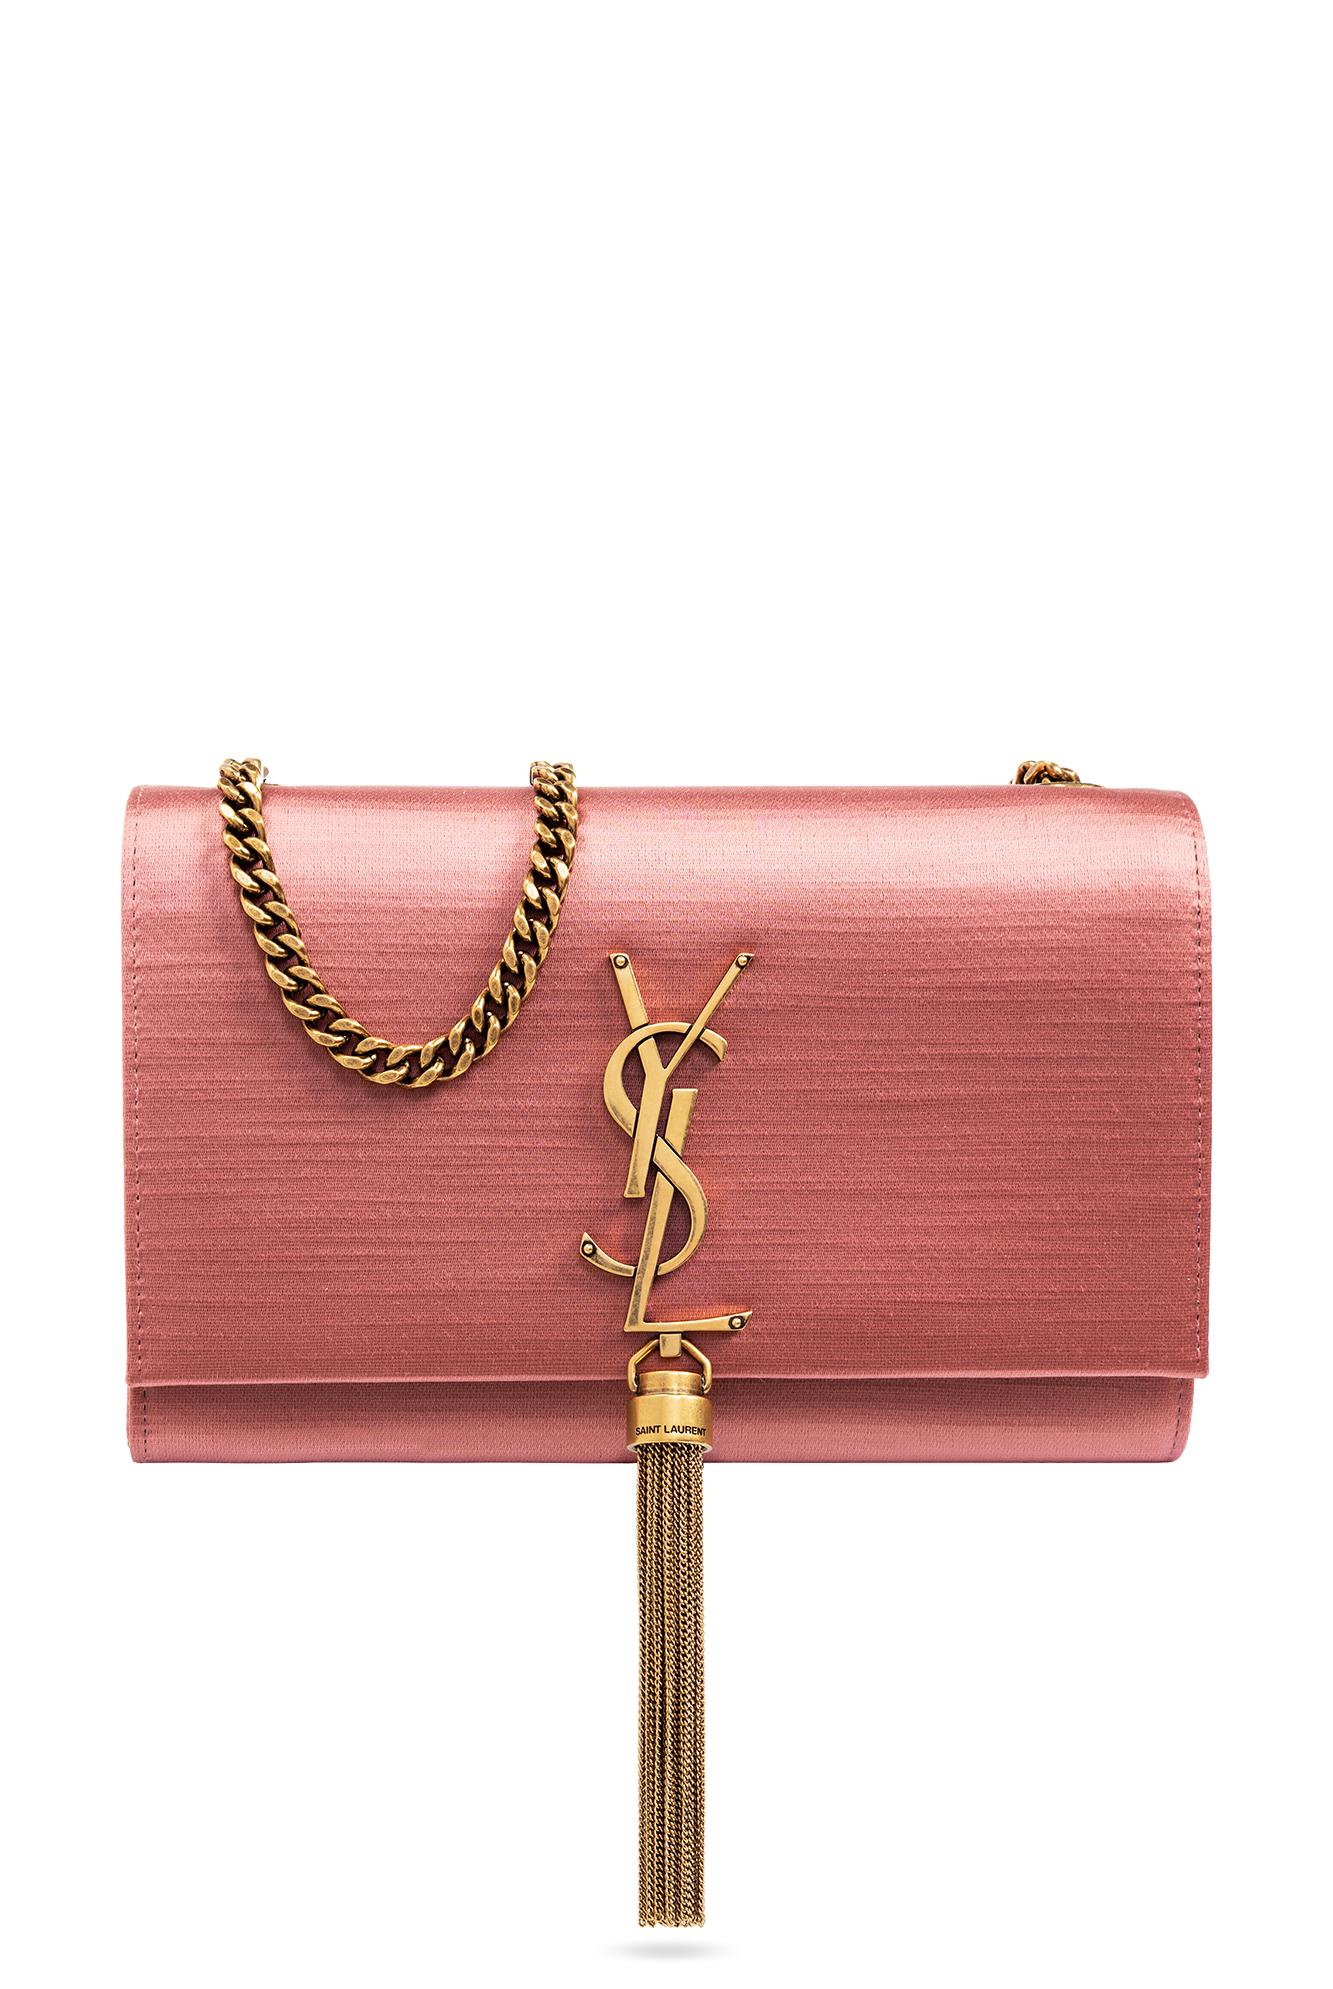 Saint Laurent 'kate Small' Shoulder Bag in Pink | Lyst